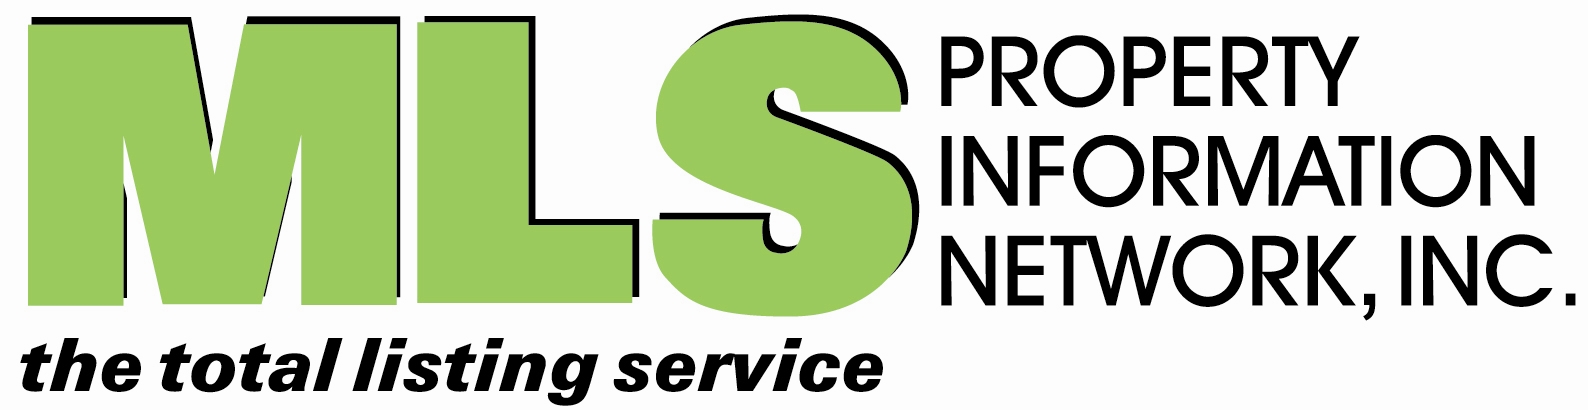 MLS Property Information Network, Inc(MLS PIN) - LinkedIn